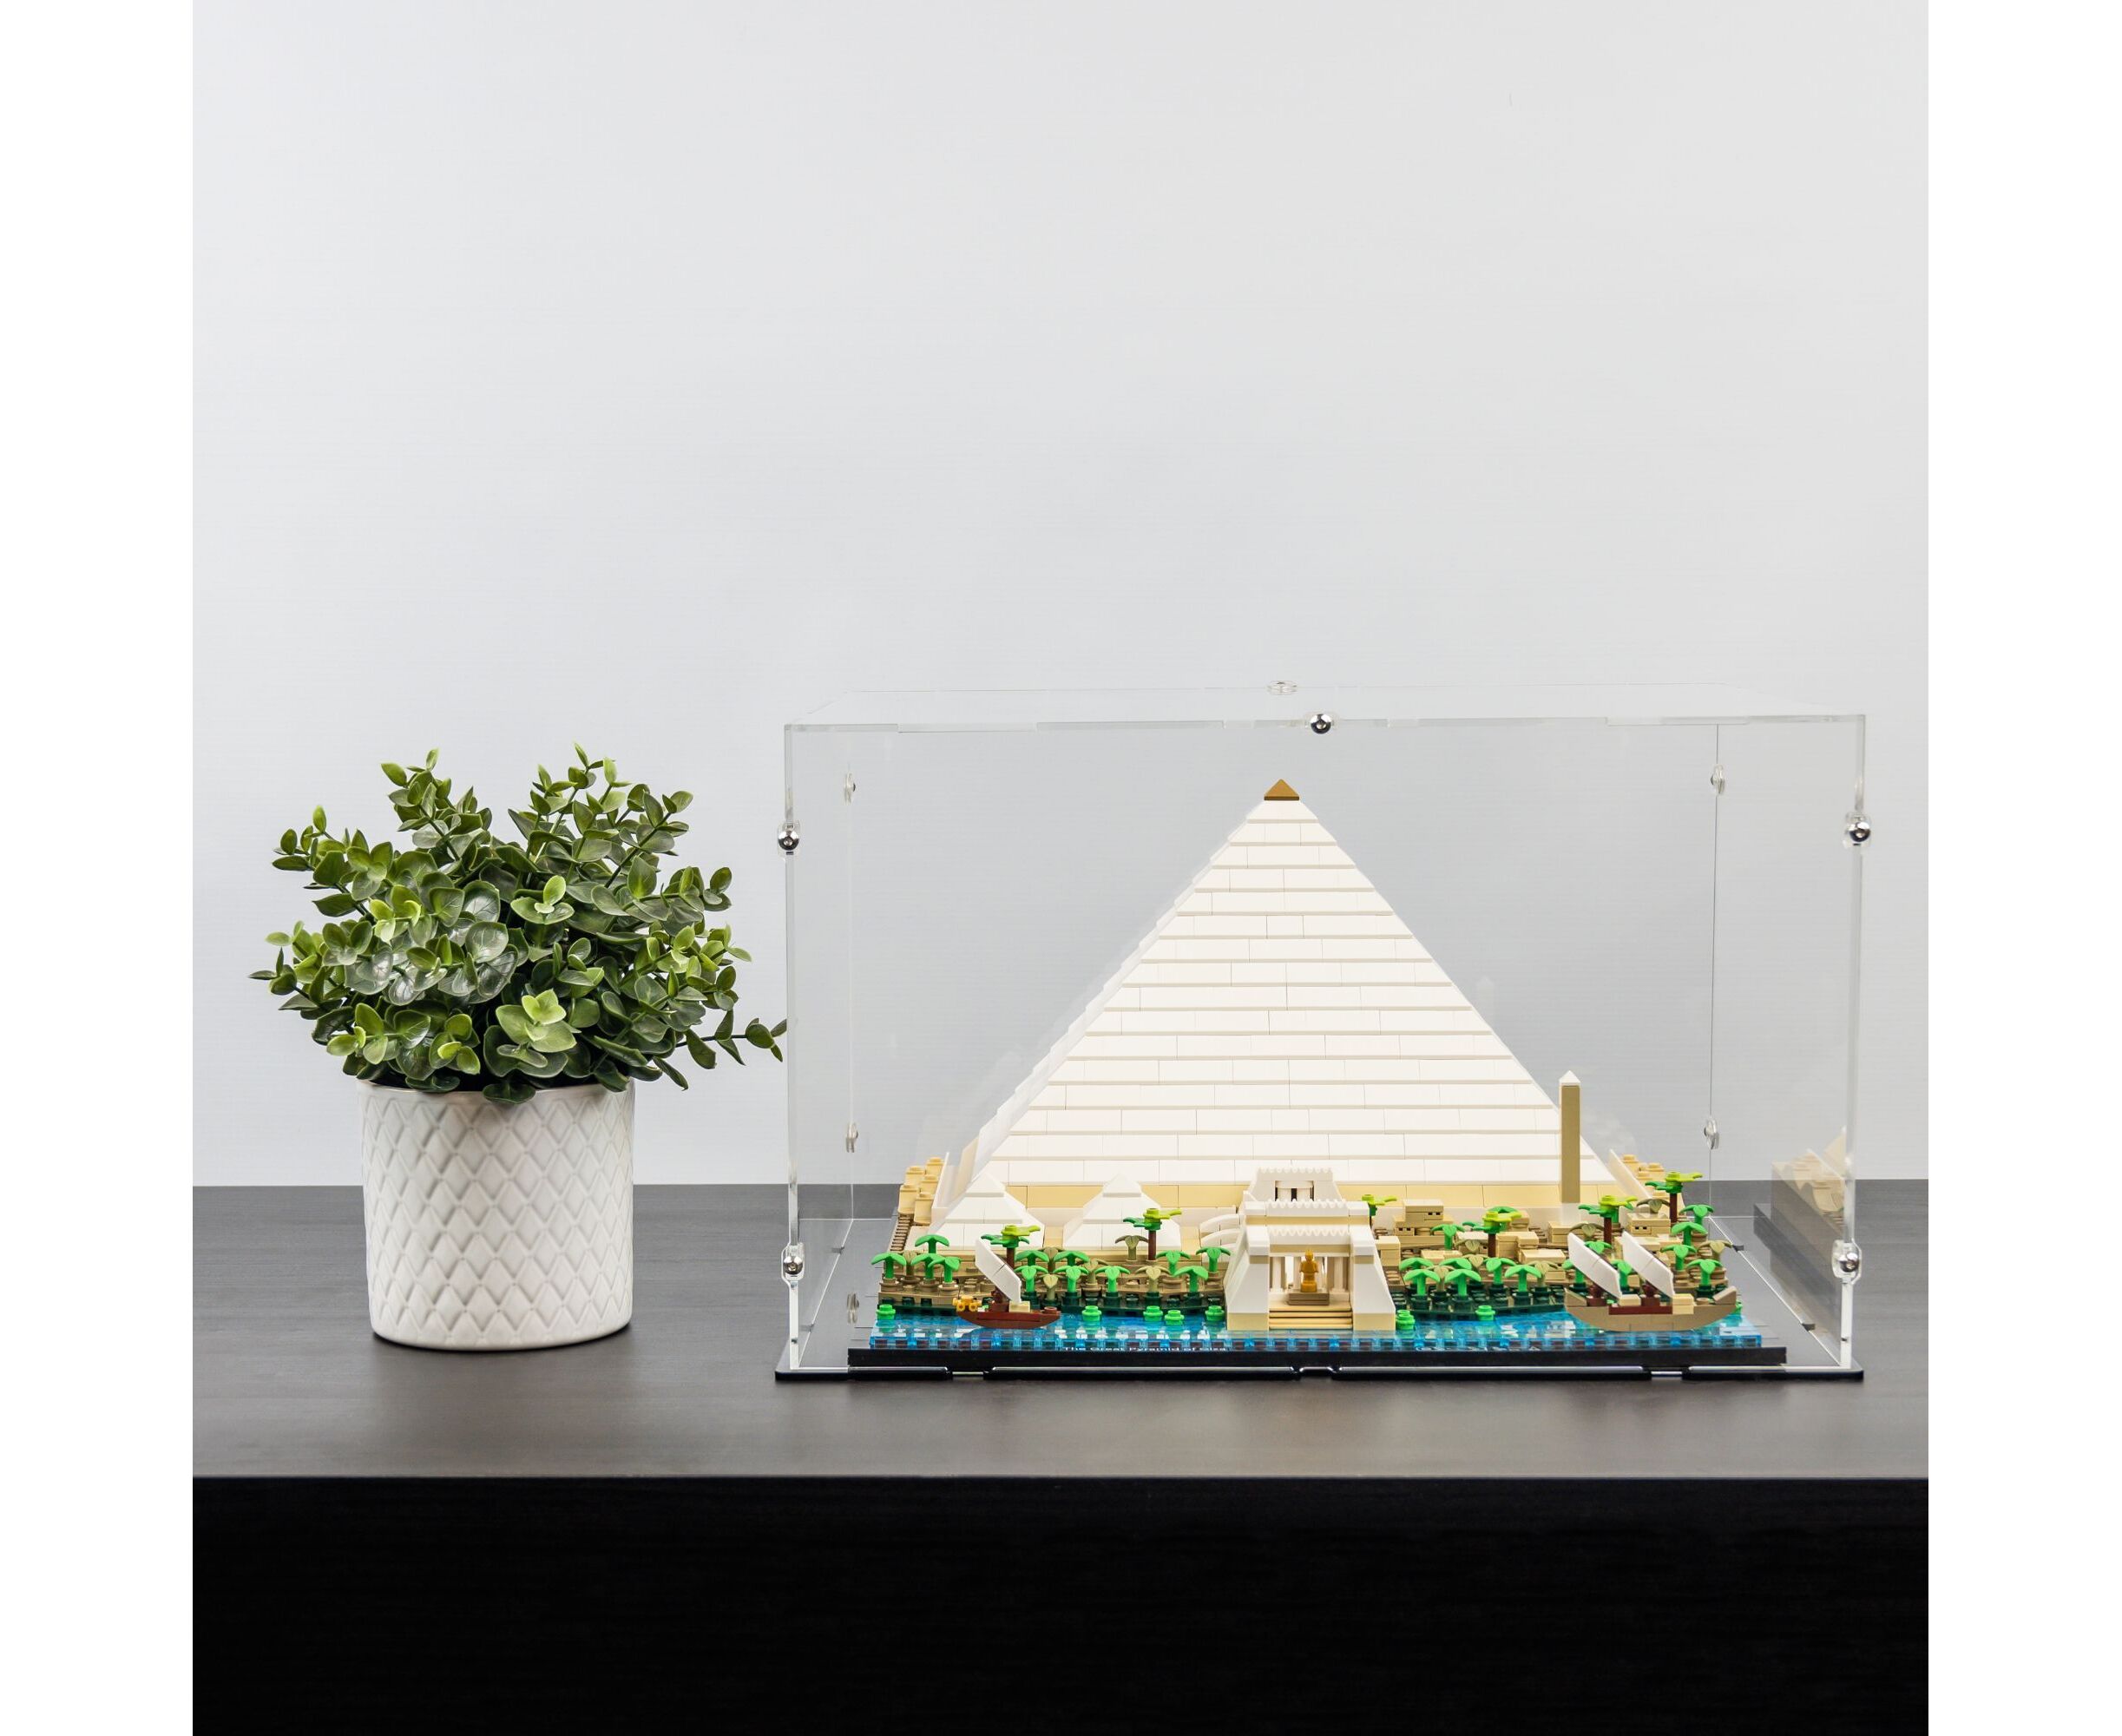 Acryl Vitrinen für Deine Lego Modelle-Lego 21058 Cheops-Pyramide